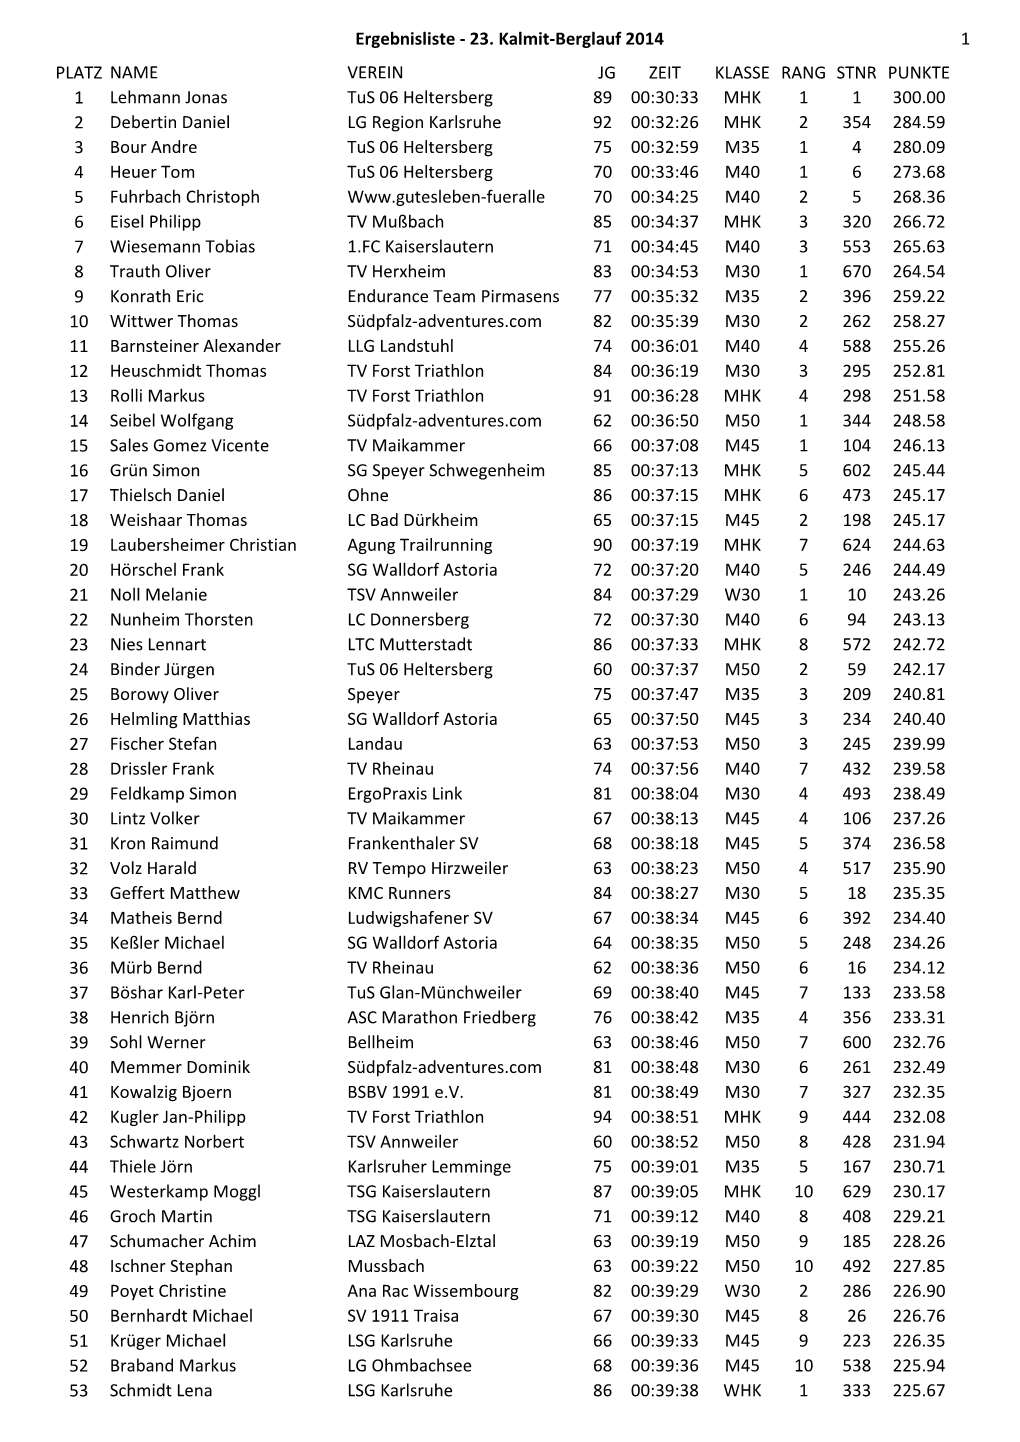 Ergebnisliste Kalmit-Berglauf Am 22.11.2014